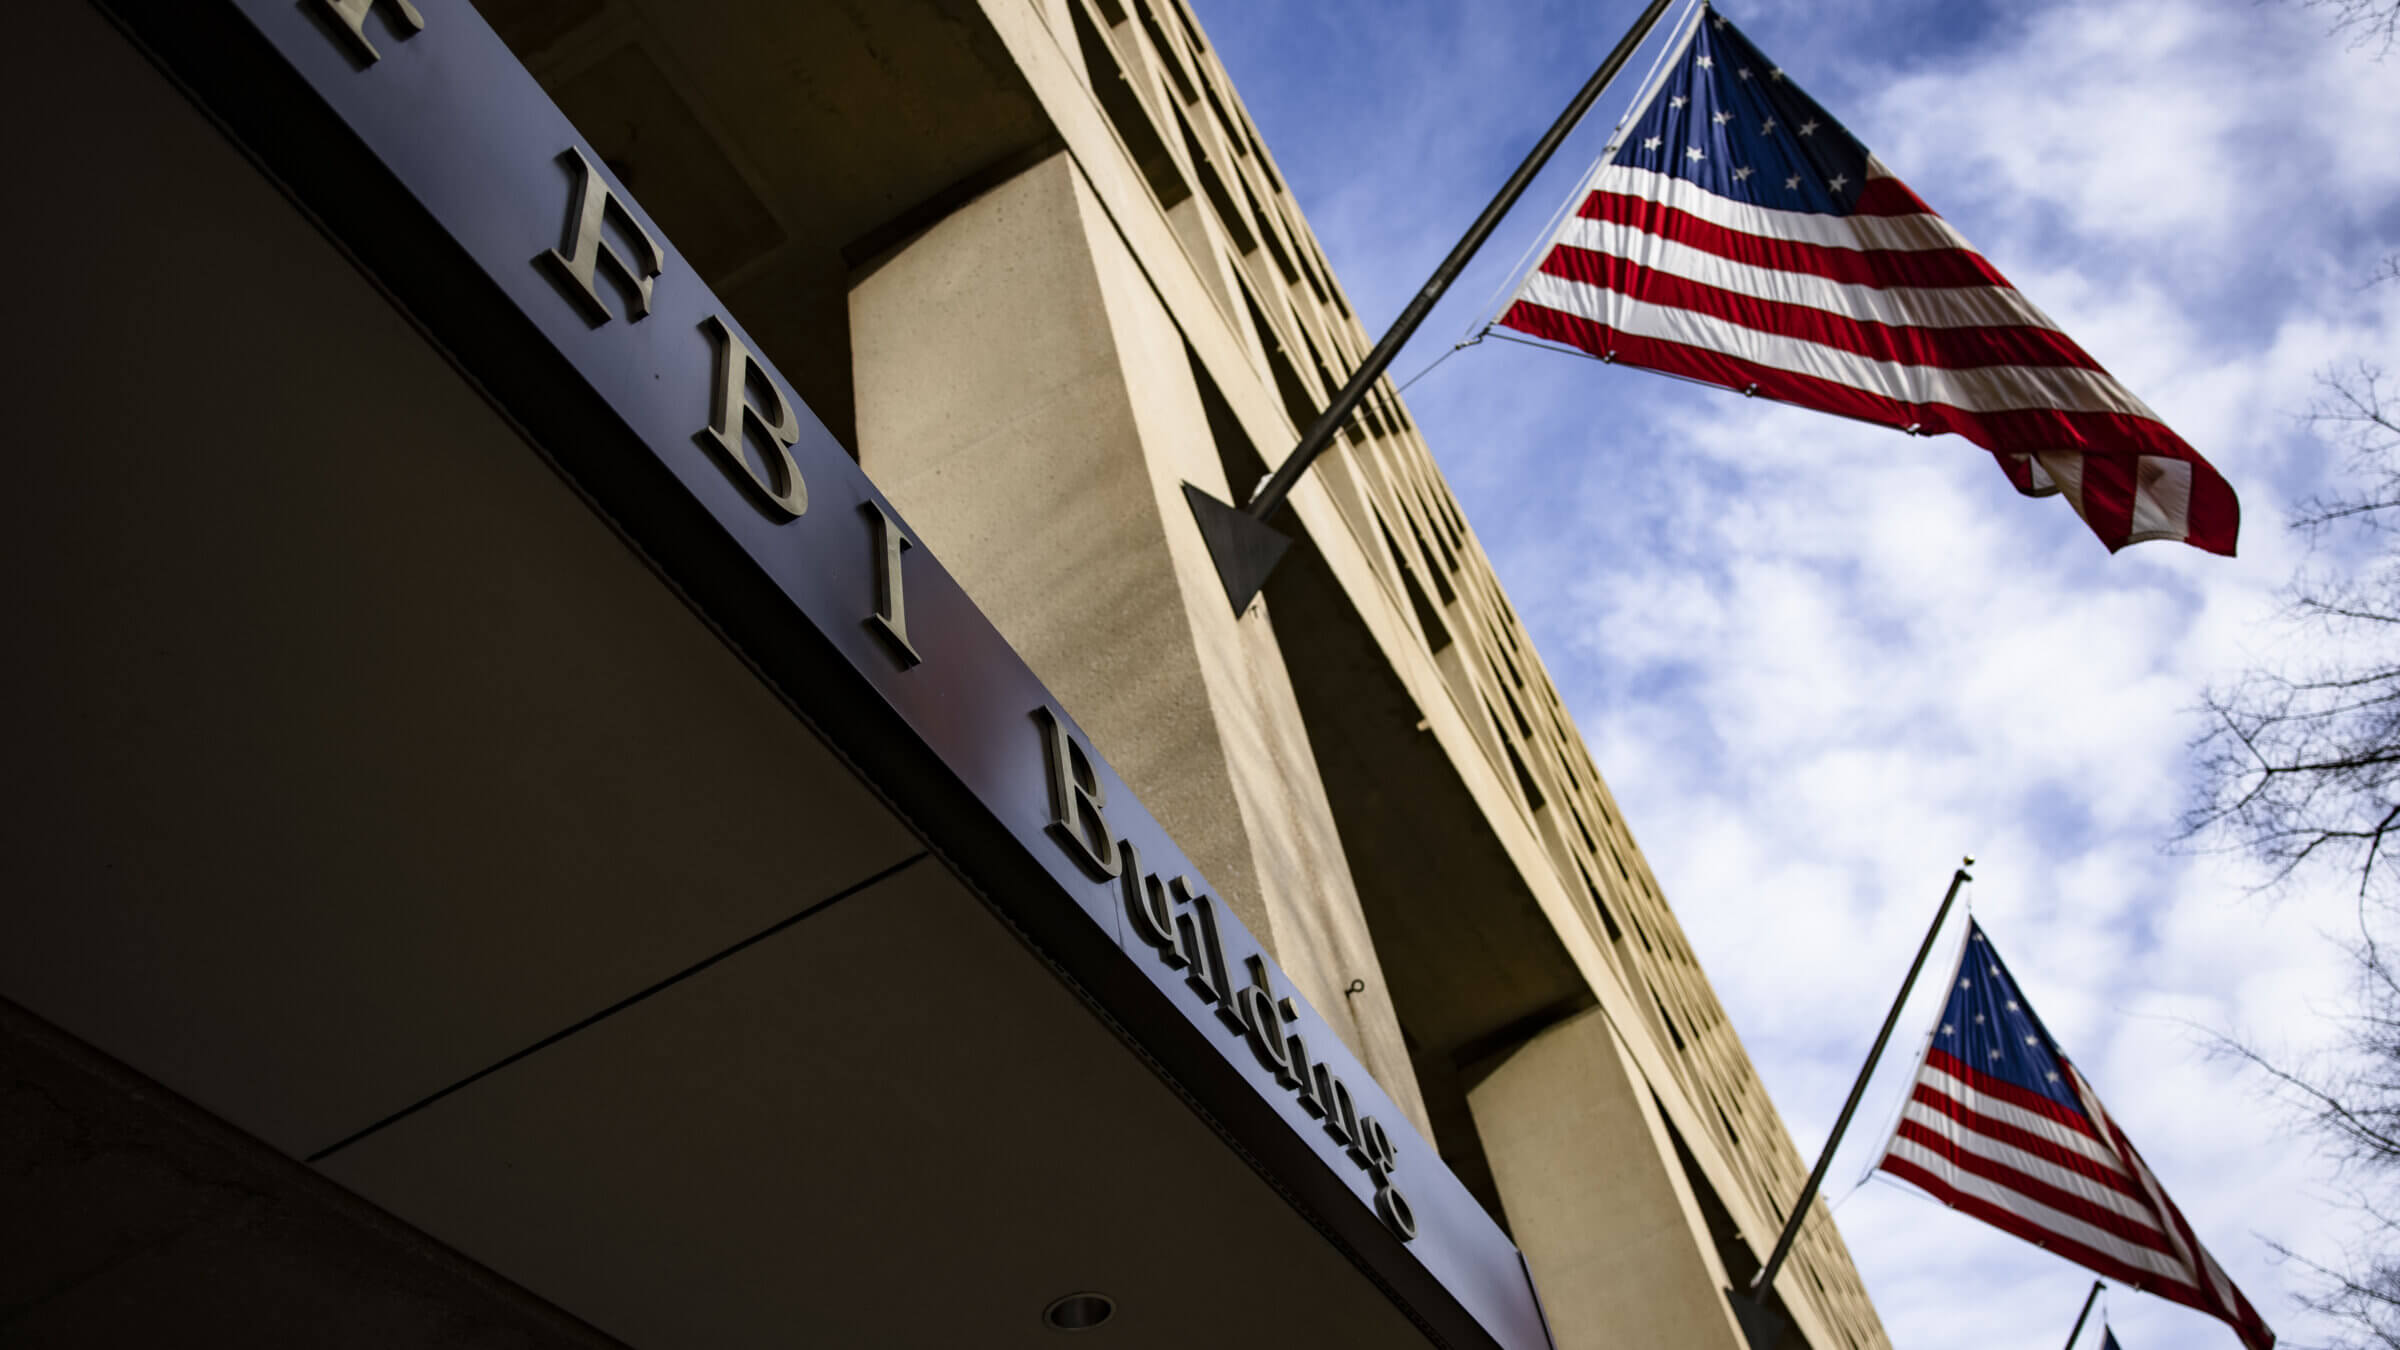 The FBI headquarters in Washington, D.C.